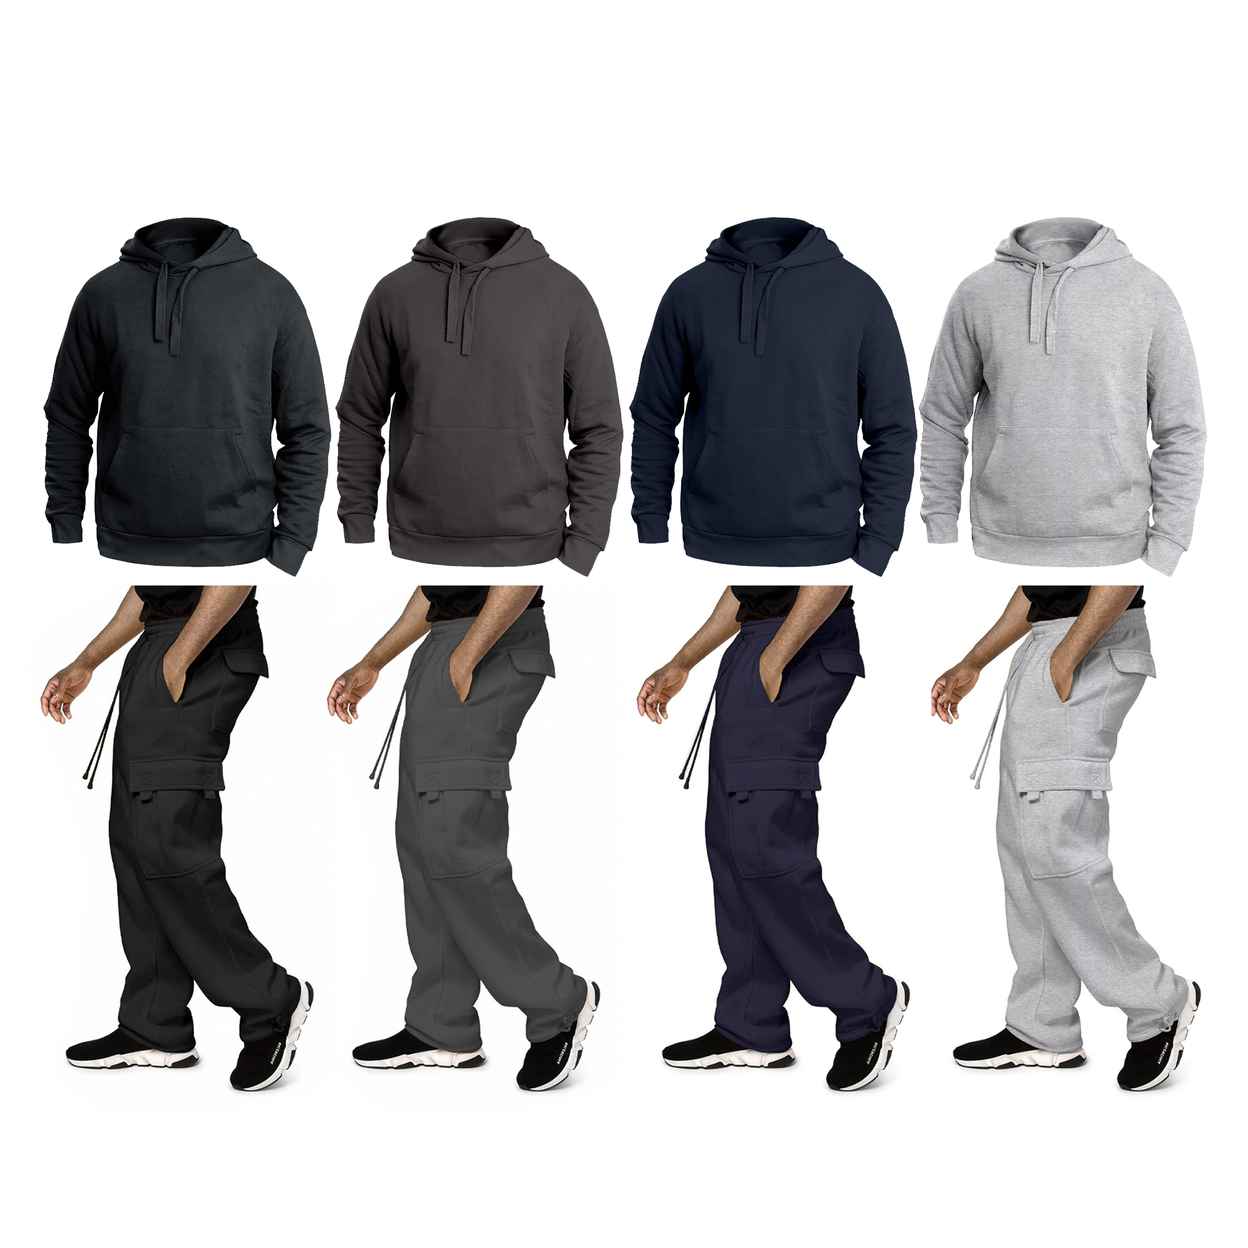 Multi-Pack: Big & Tall Men's Winter Warm Cozy Athletic Fleece Lined Multi-Pocket Cargo Sweatsuit - Black, 1-pack, Xx-large